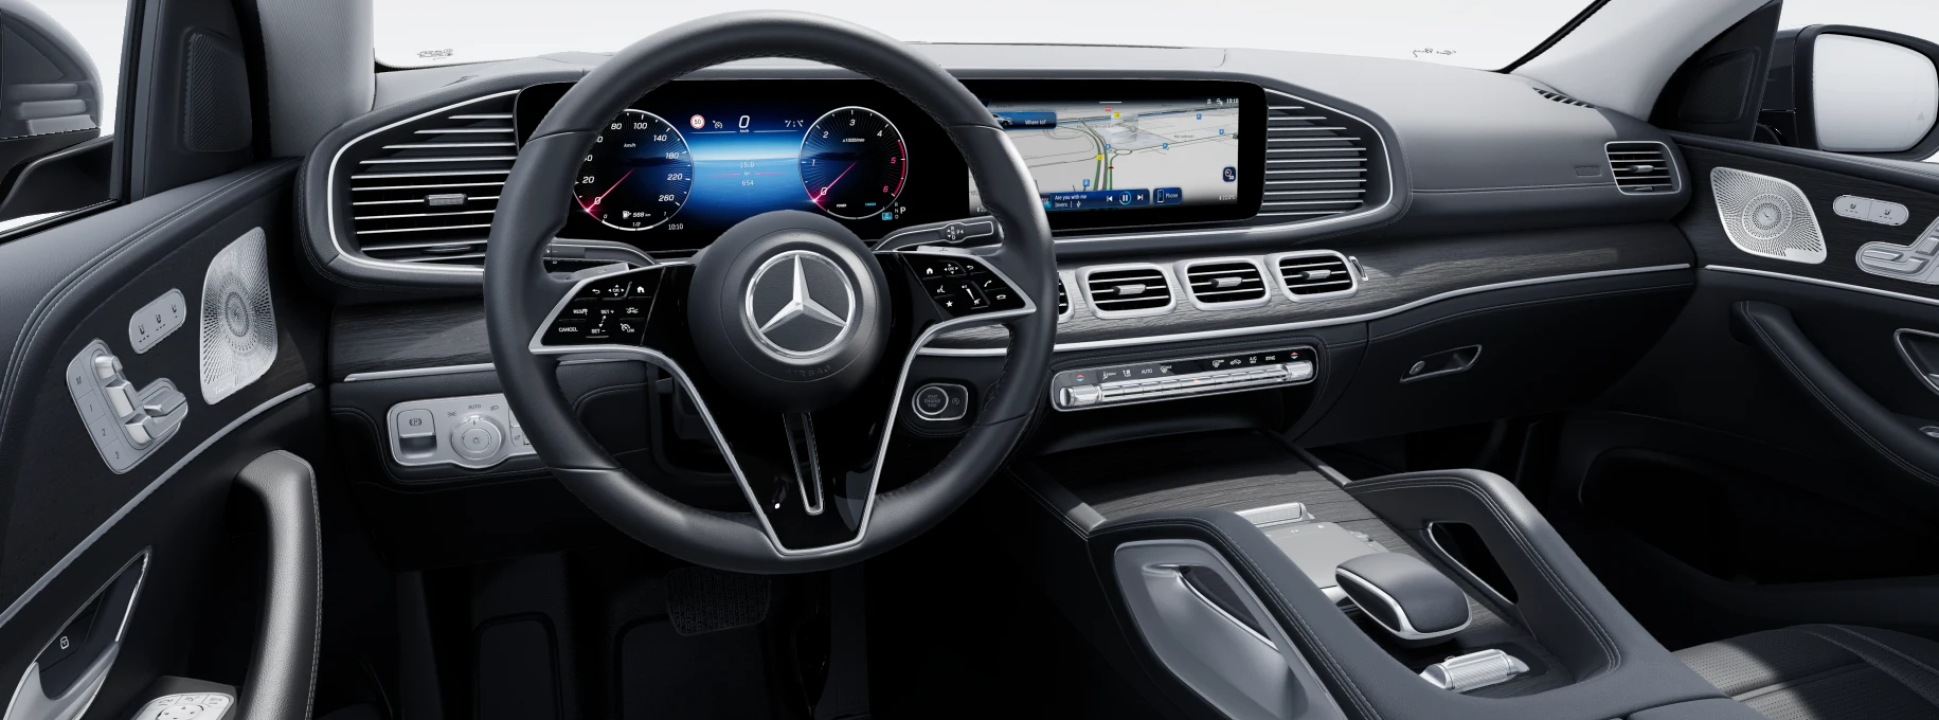 Mercedes-Benz GLE Coupe 450d EQ Boost 4Matic 9G Tronic - foto 9